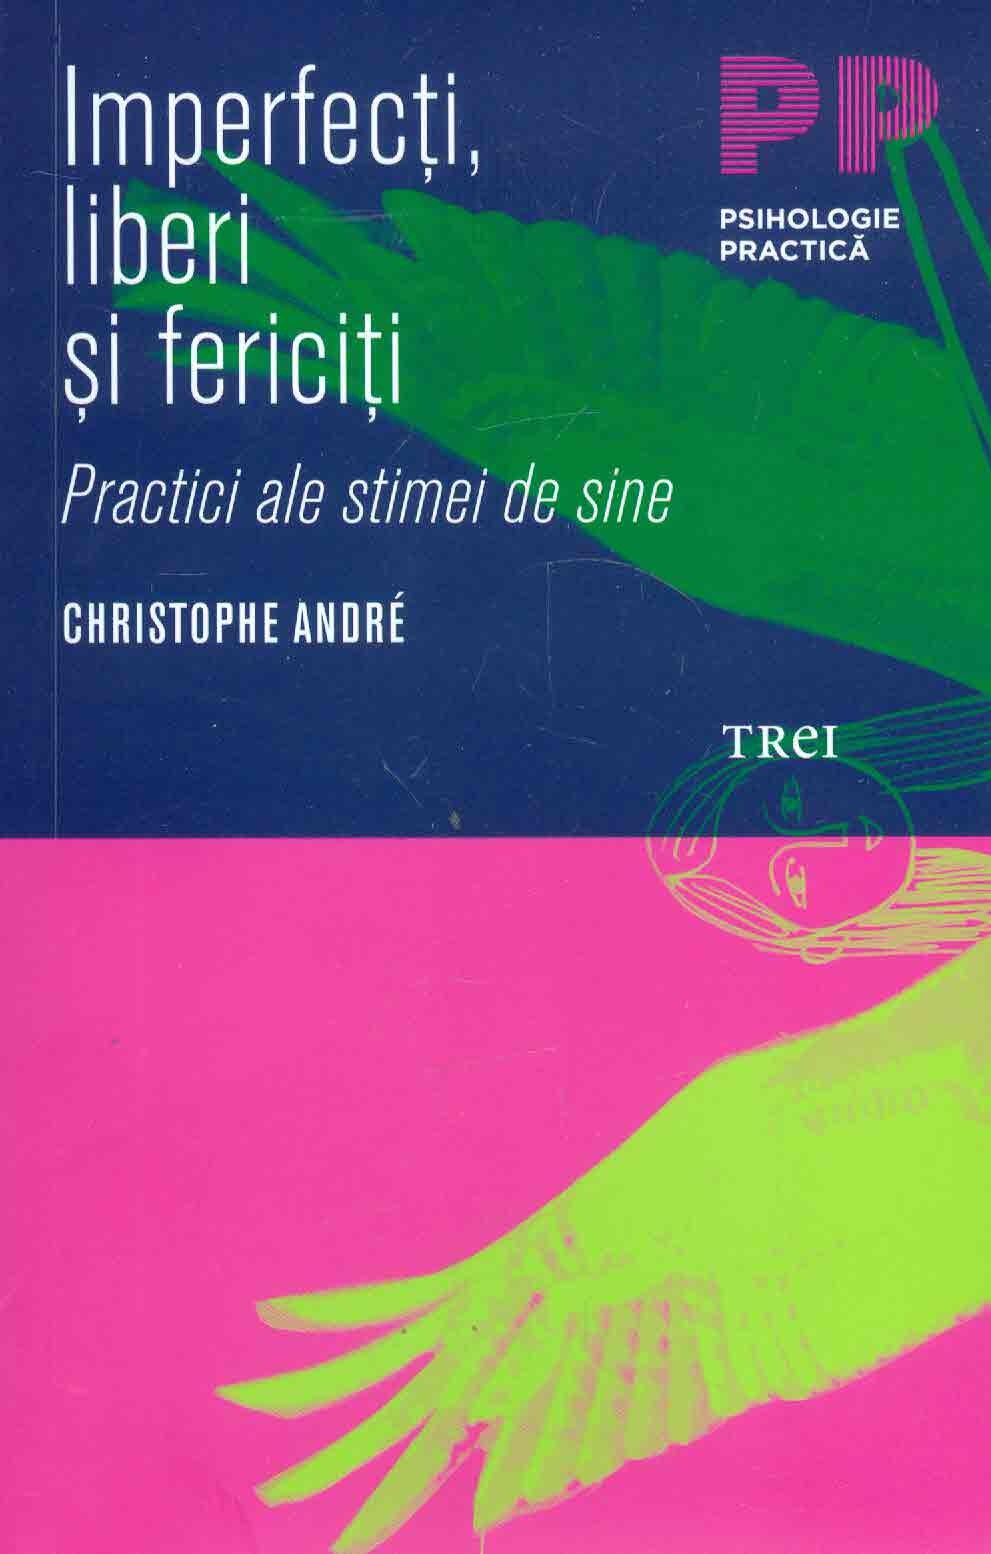 Imperfecti, liberi si fericiti. Practici ale stimei de sine | Christophe Andre carturesti.ro poza bestsellers.ro